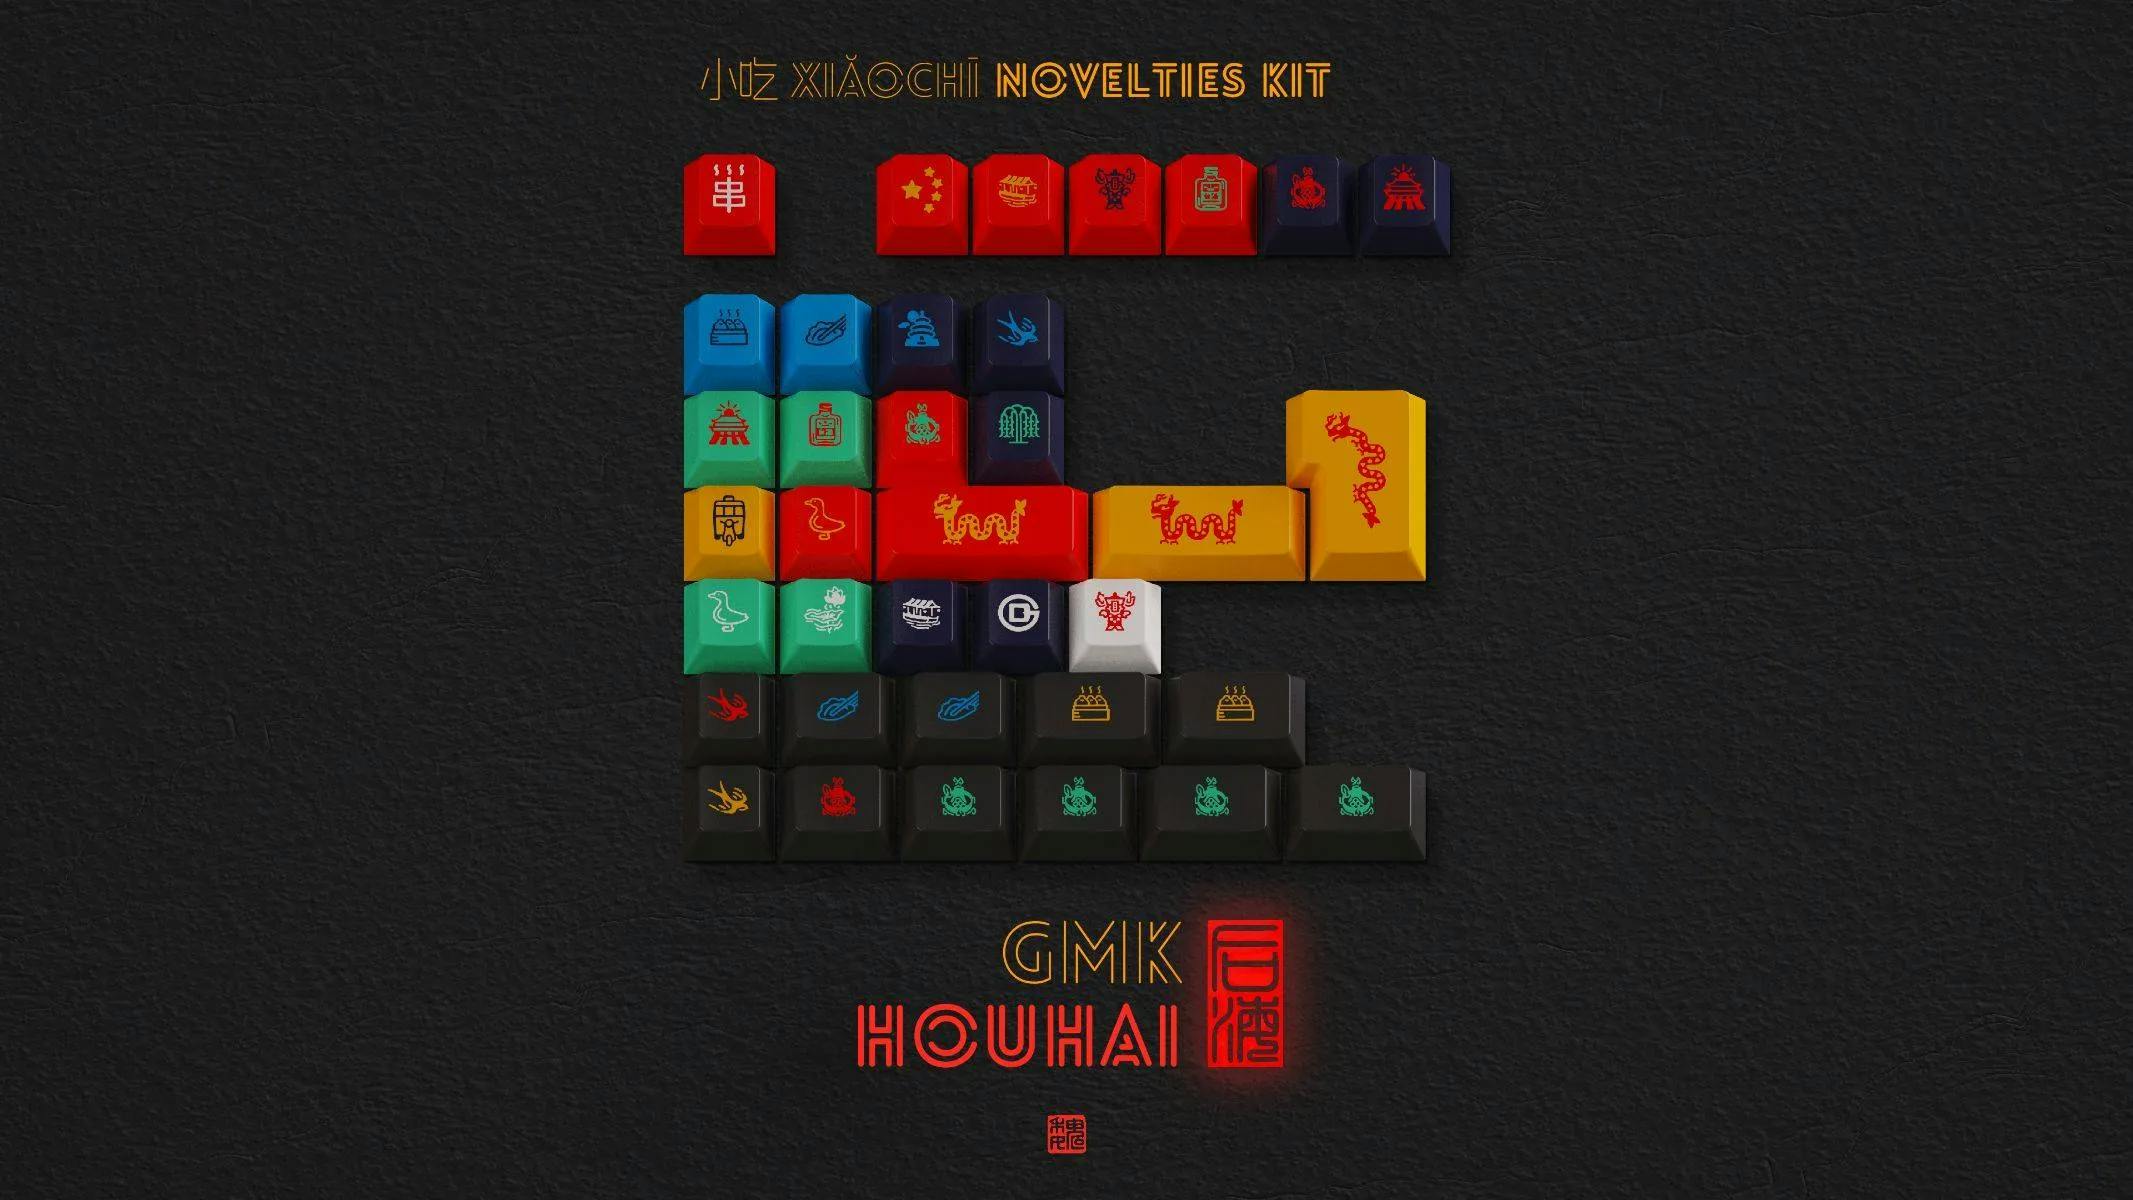 Image for GMK Houhai (Xiăochī Novelty Kit)